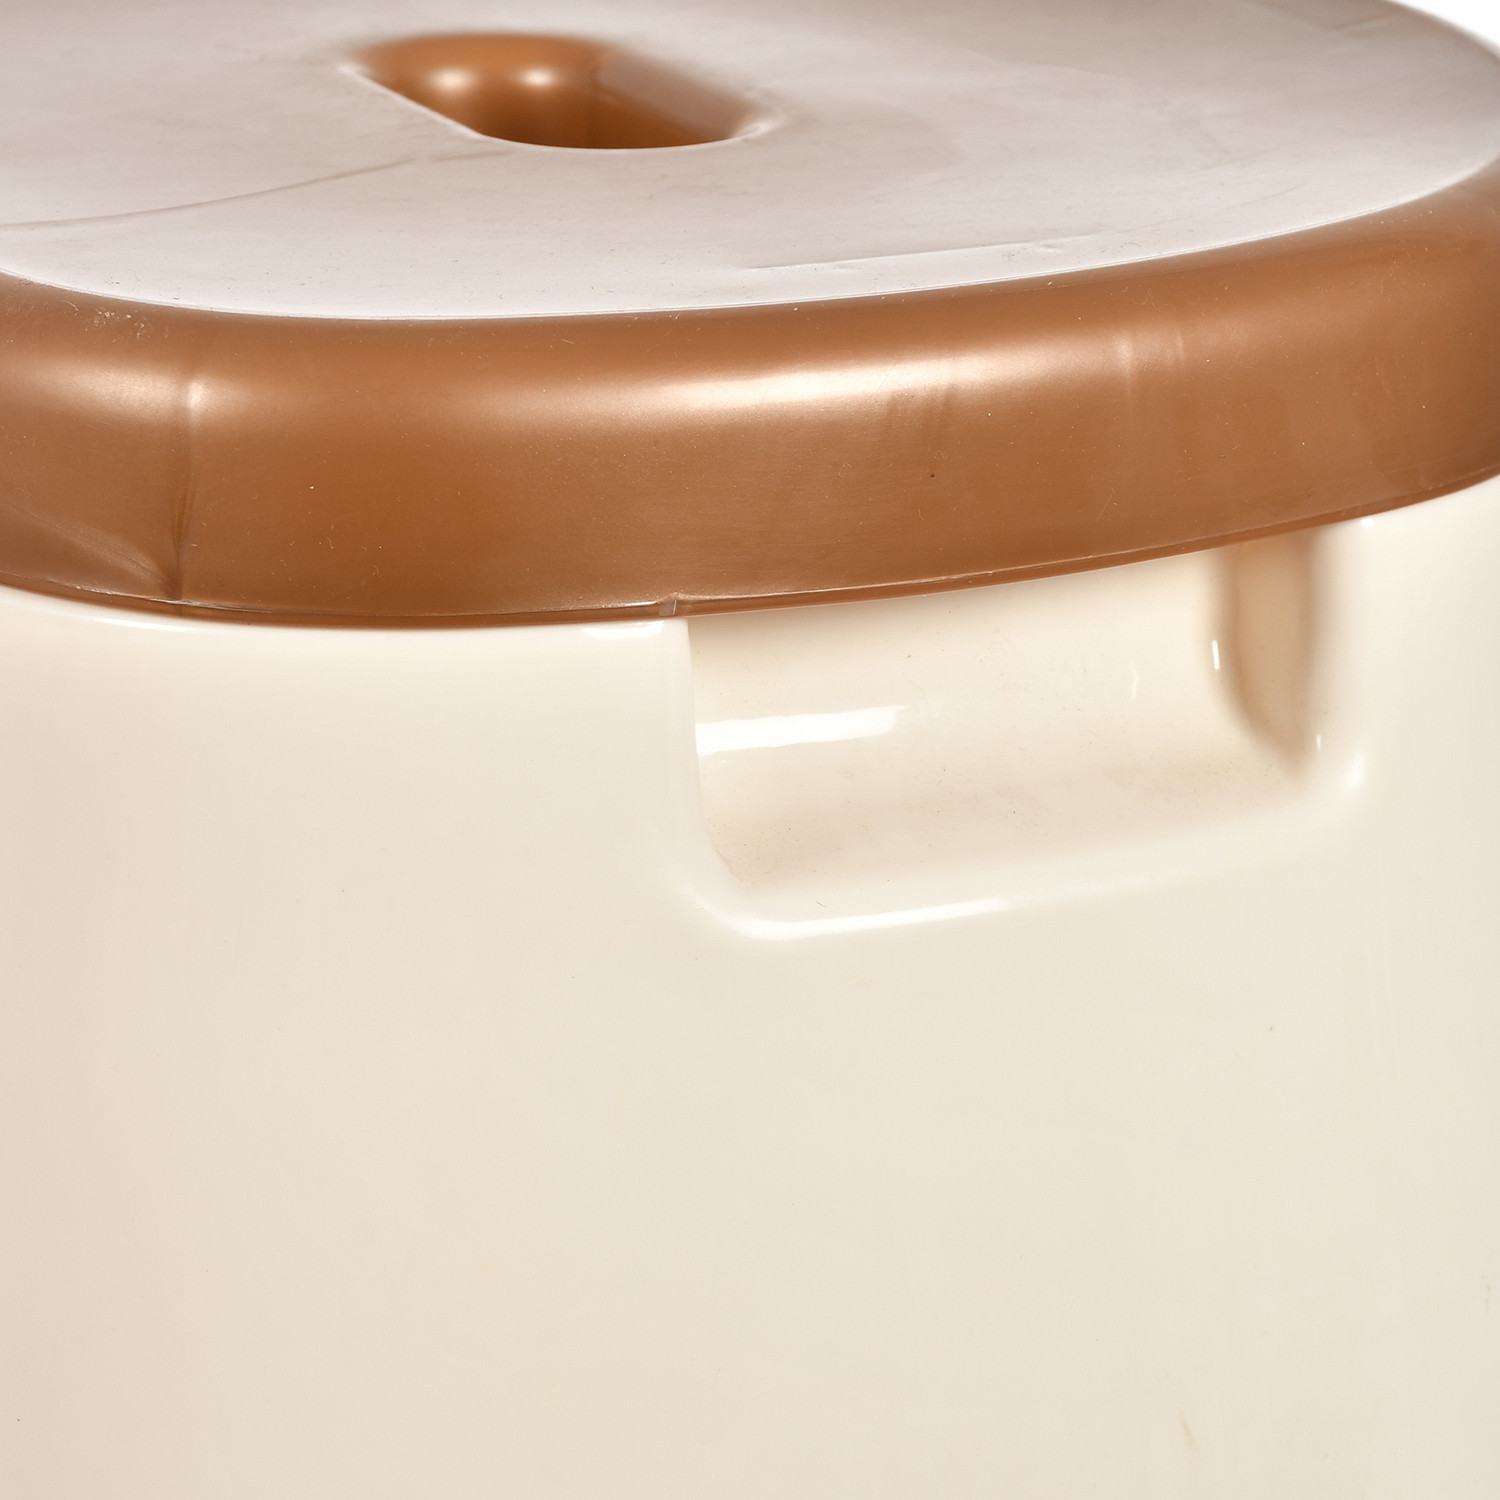 Kuber Industries Big Size Flower Printed Plastic Sitting Stool For Indoor & Outdoor (Brown & Cream)-HS43KUBMART26199